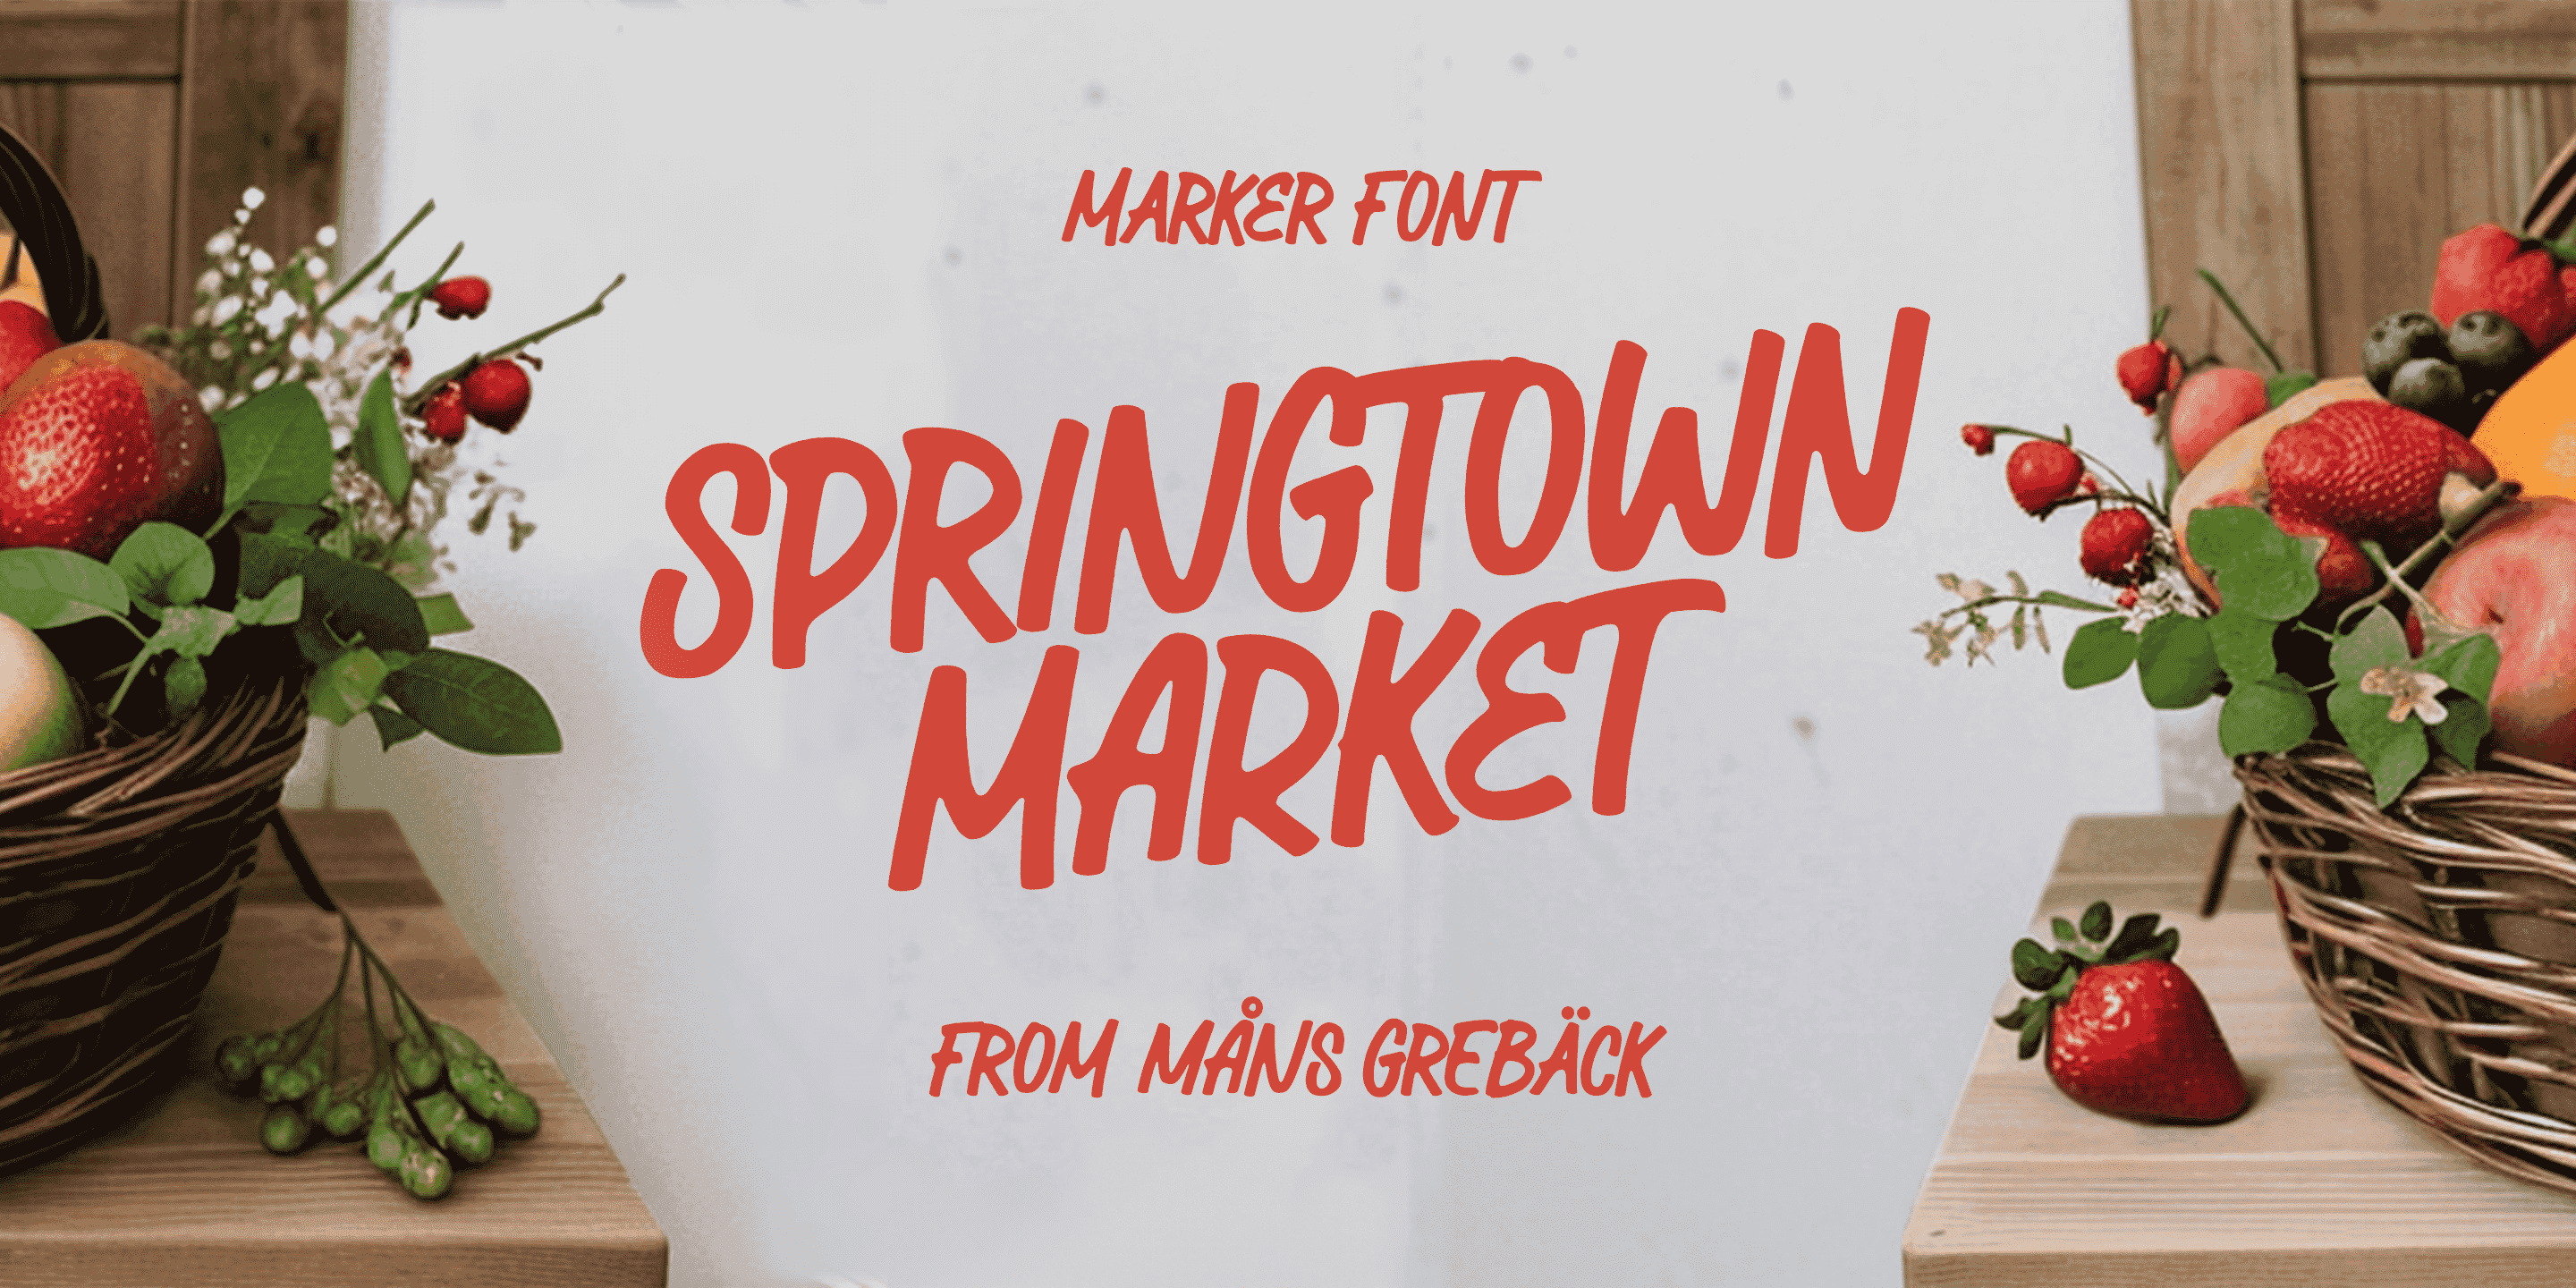 Springtown Market PERSONAL